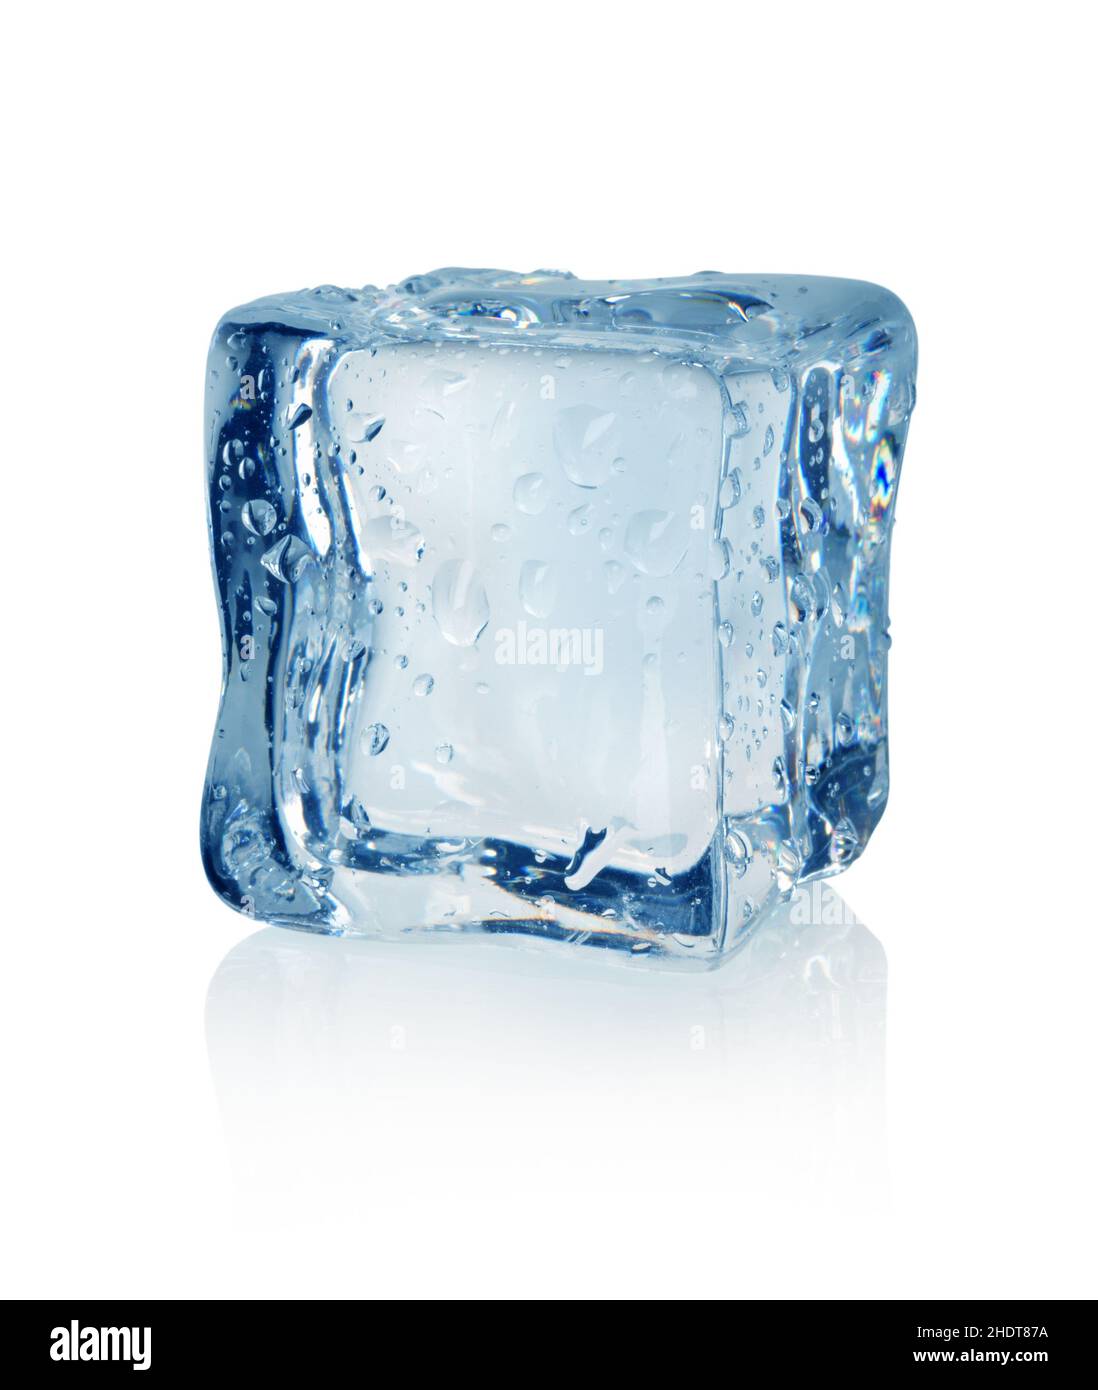 Tres cubos de hielo en un charco de agua